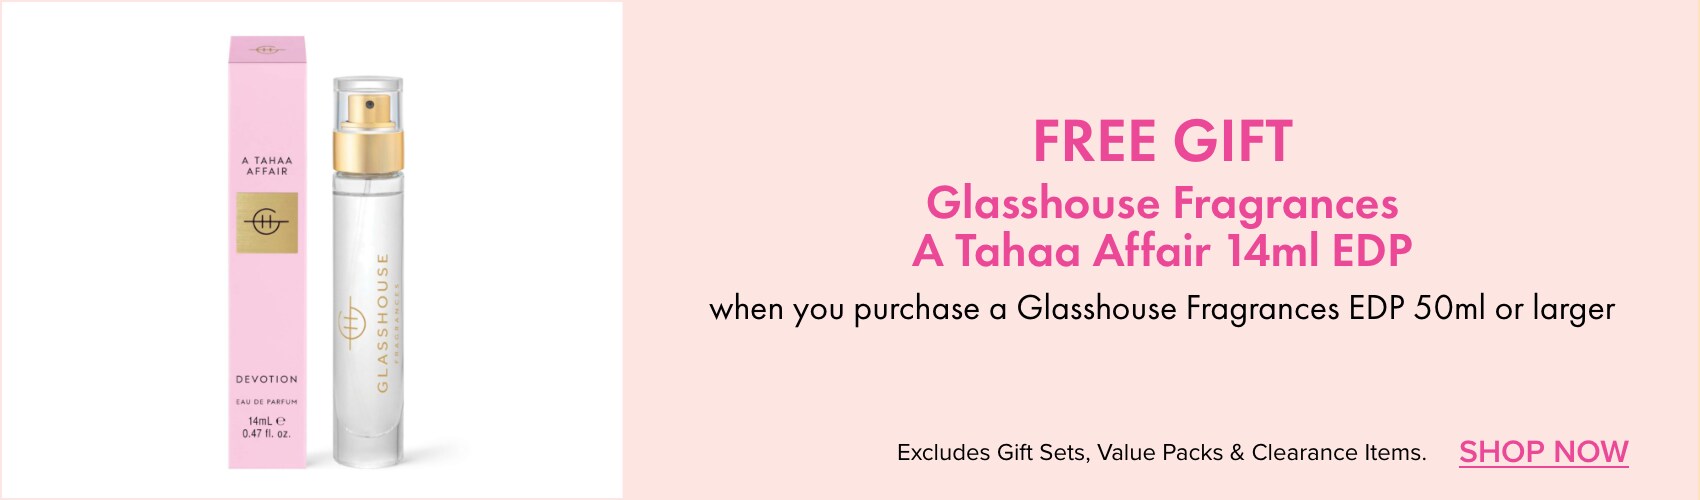 FREE GIFT Glasshouse Fragrances A Tahaa Affair 14ml EDP